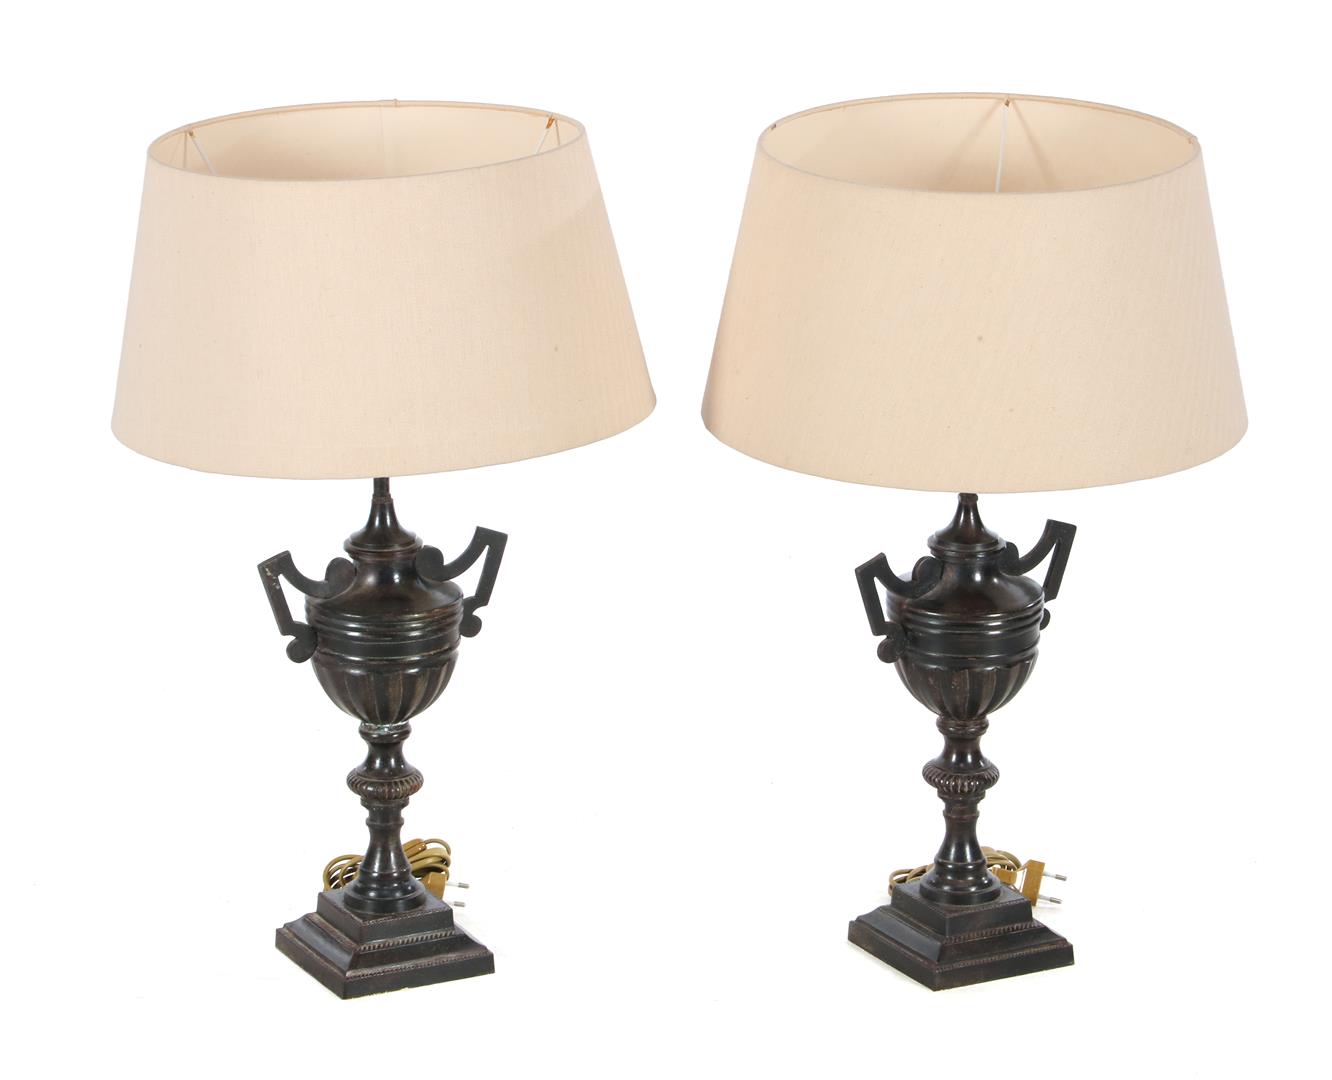 2 metal vase model table lamps - Image 2 of 2